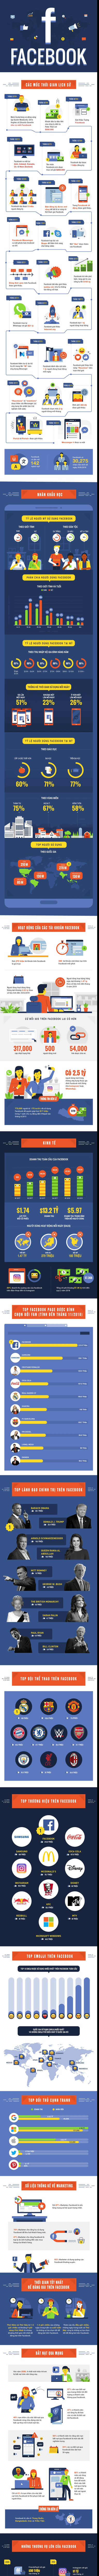 nhung-thong-ke-ve-facebook-ma-cac-marketer-tren-the-gioi-can-biet